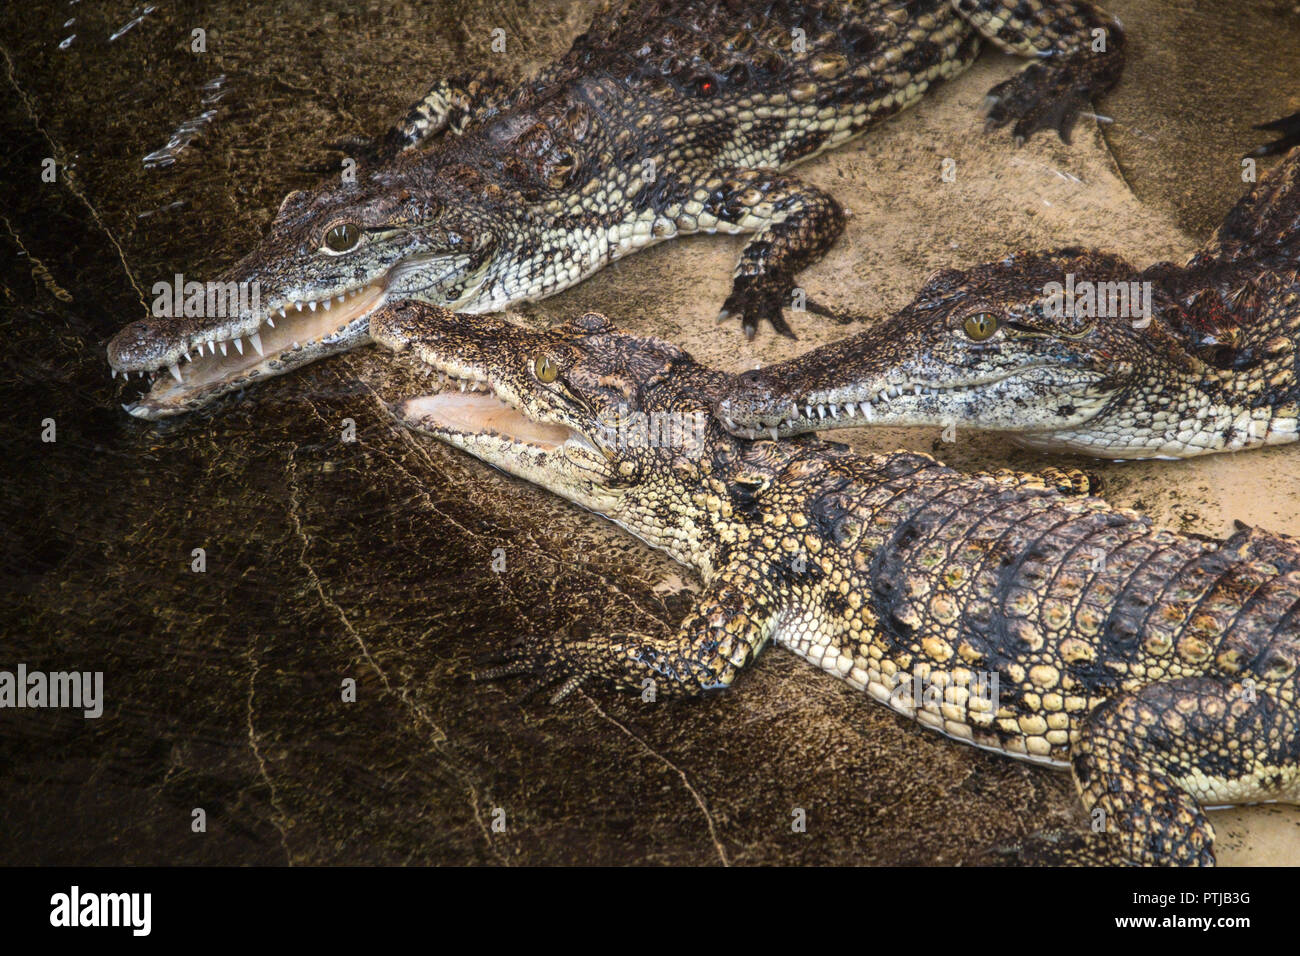 Nile crocodiles gathered beside a pool of water. Stock Photo